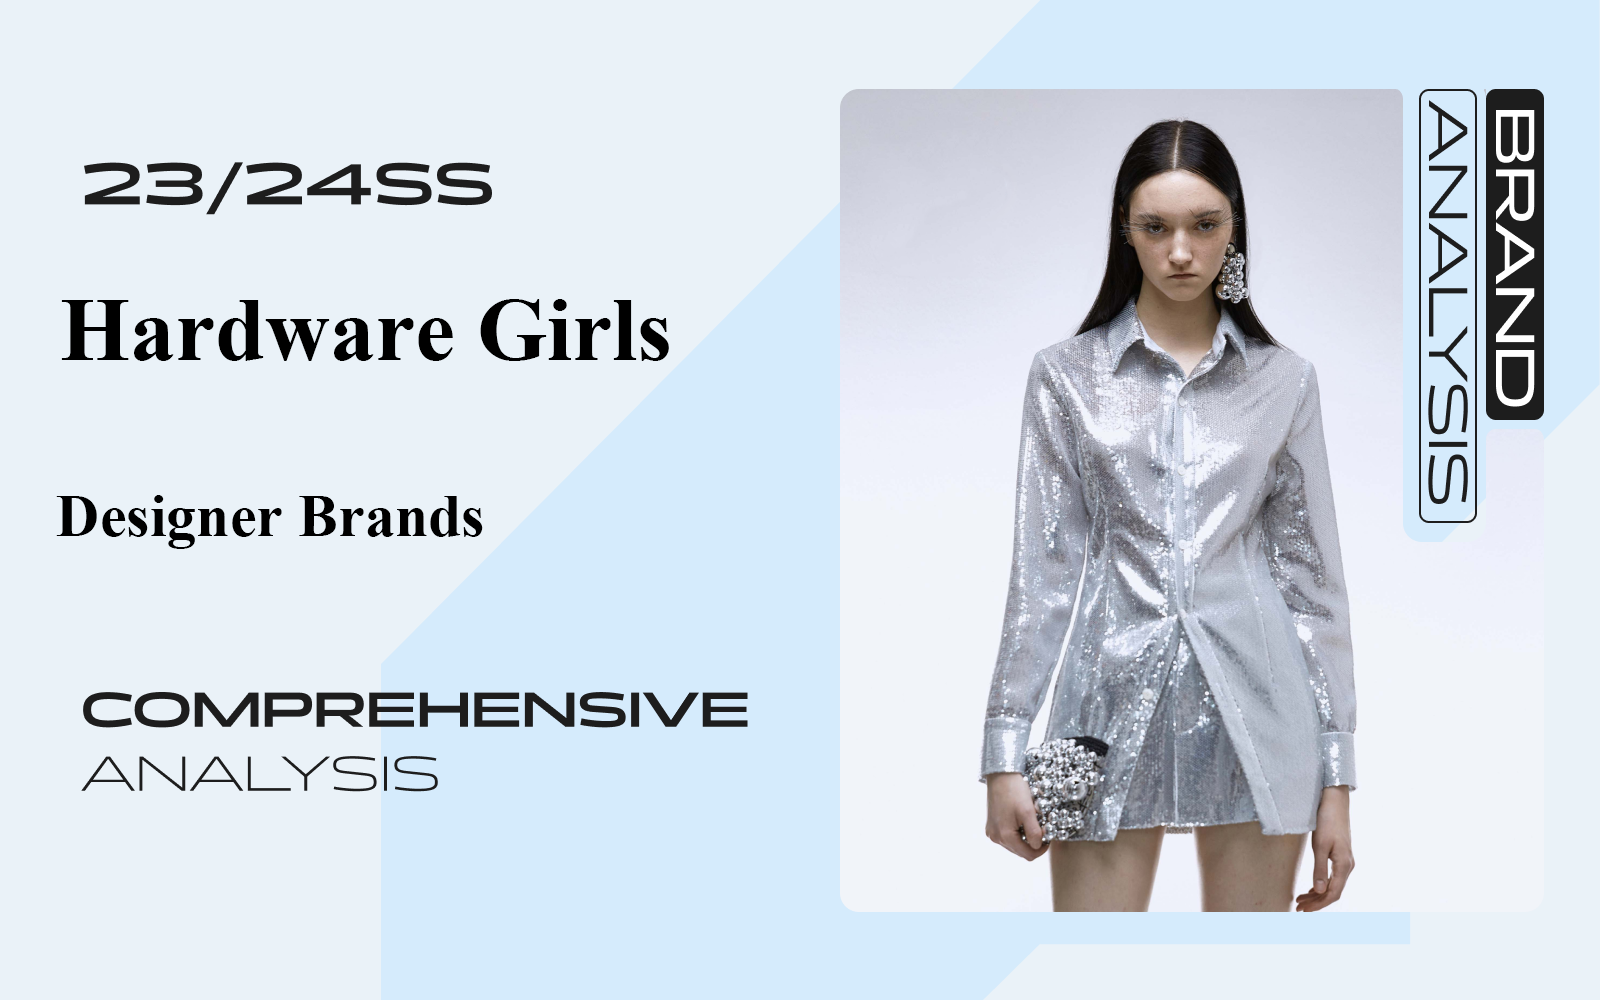 Hardware Girl -- The Comprehensive Analysis of Womenswear Designer Brands